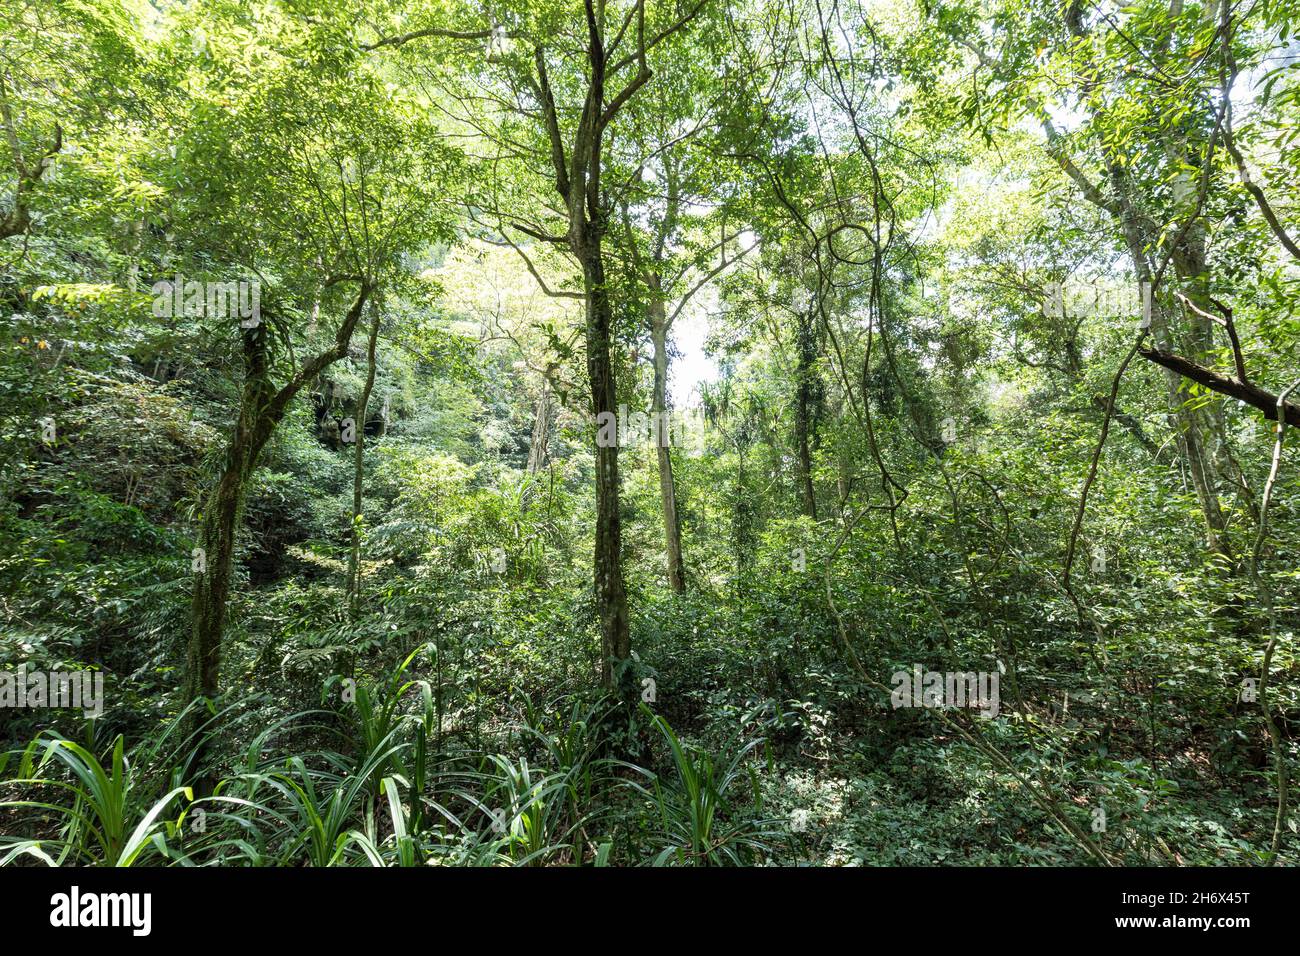 Rainforest, Niah national park, Malaysia Stock Photo